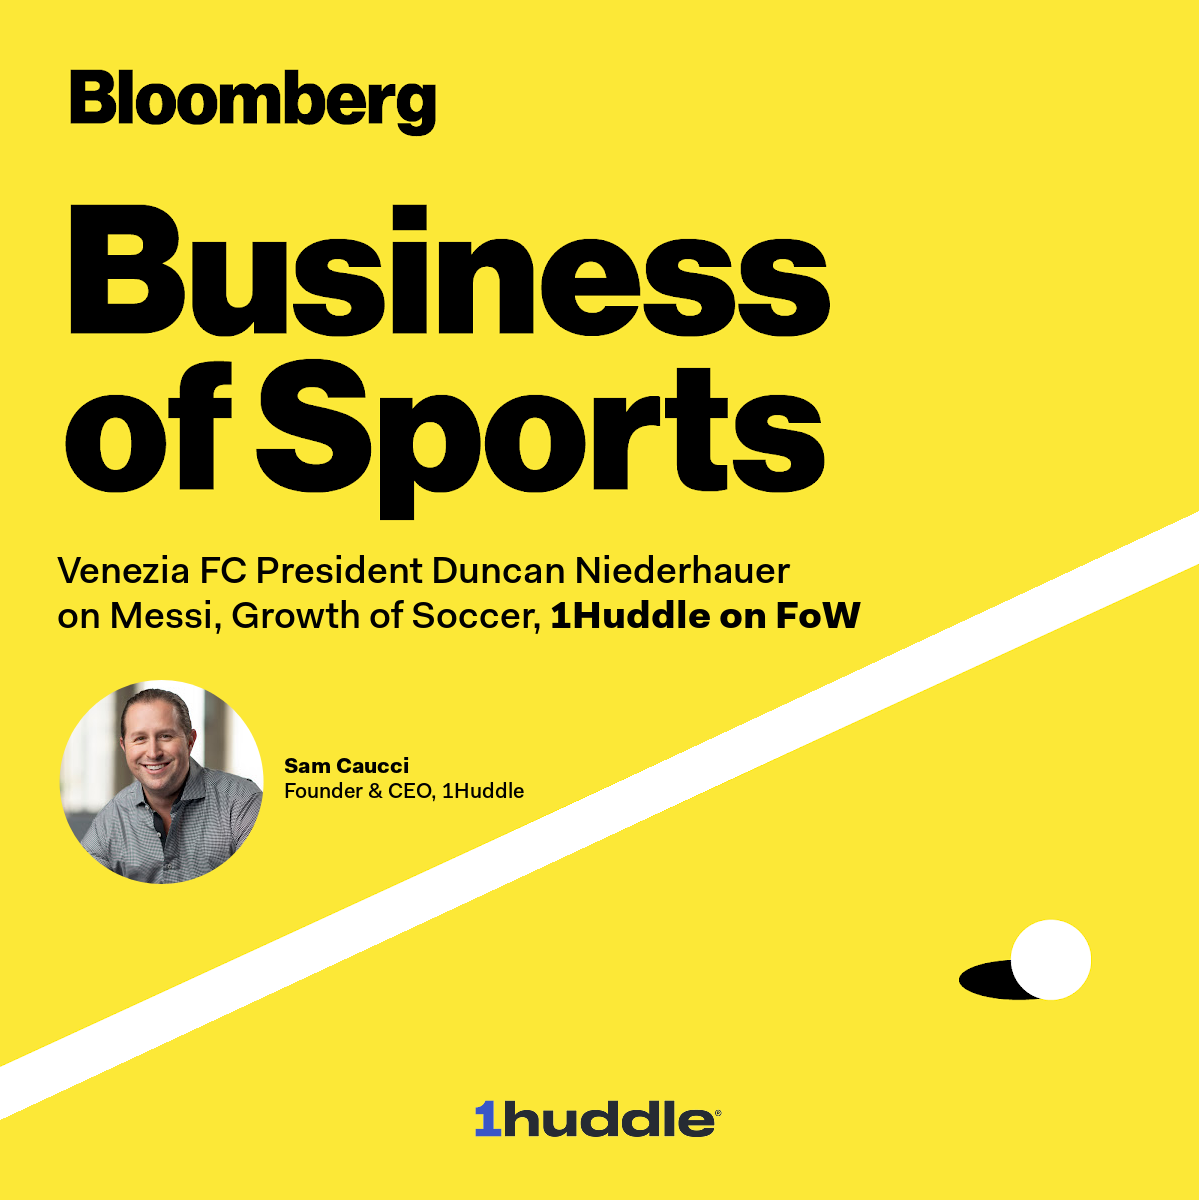 1Huddle Talking Future of Work + AI on Bloomberg Sports